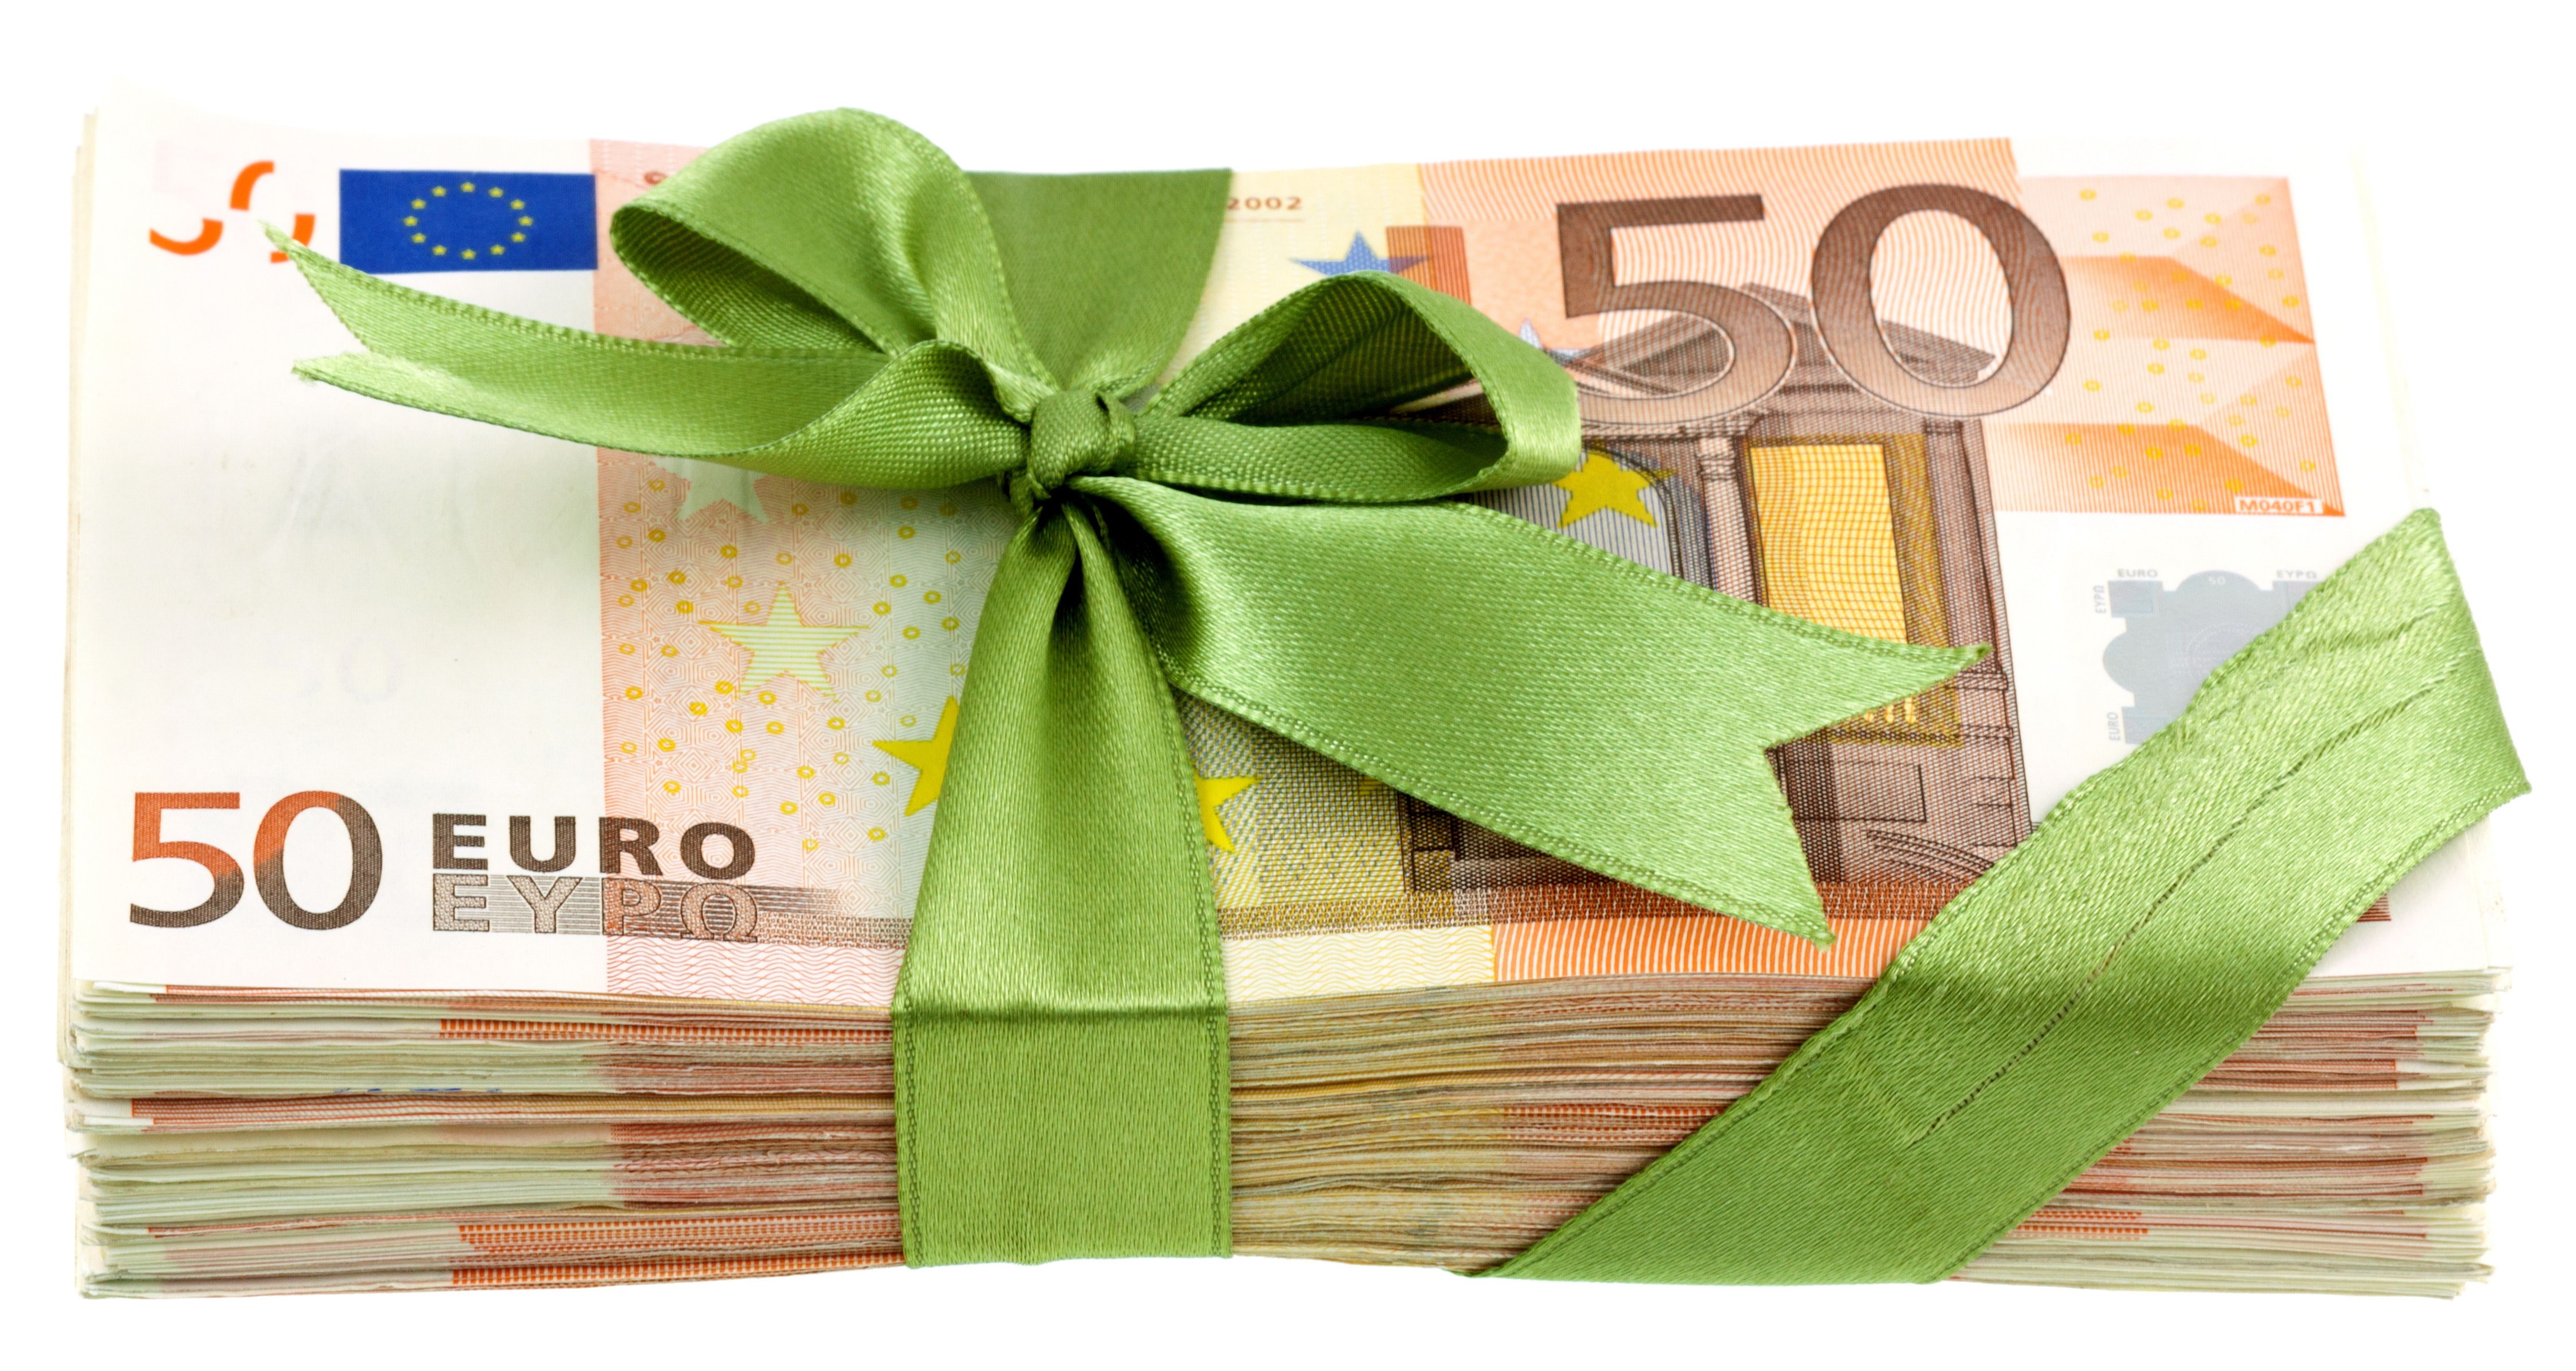 Zastaki.com - Пачка евро перевязана зеленой лентой